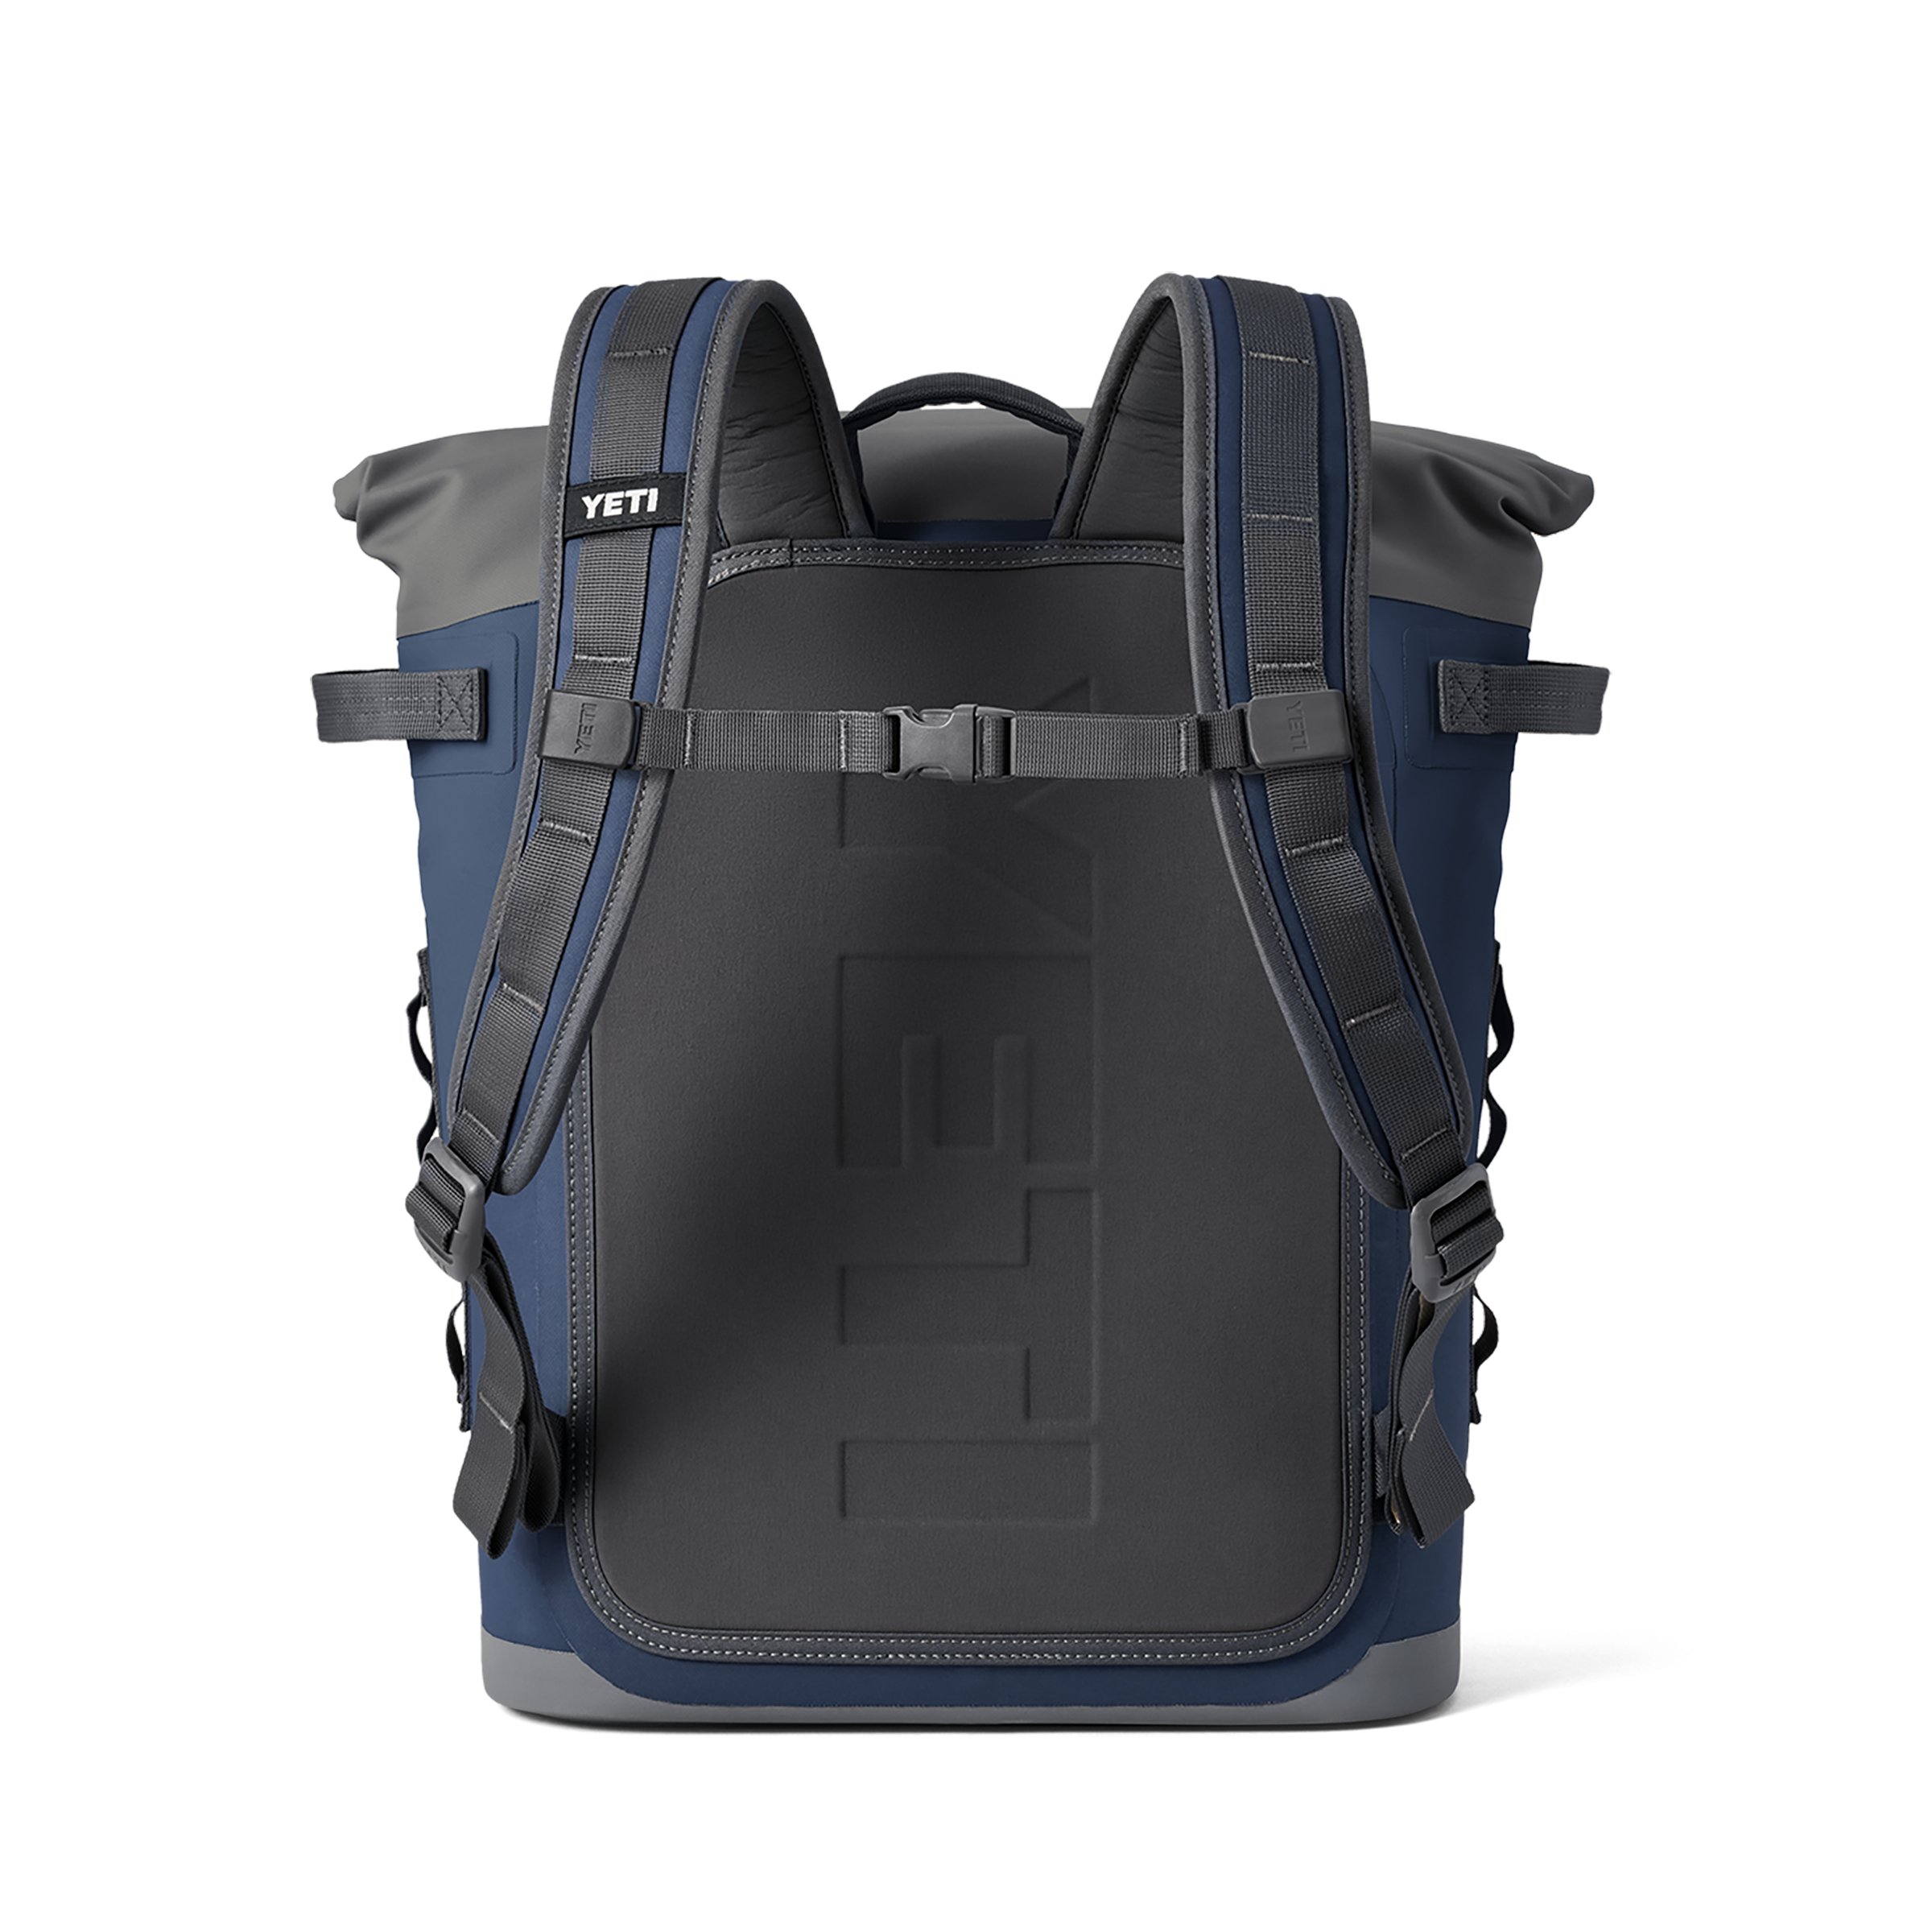 YETI Hopper M20 Backpack Soft Cooler - Charcoal